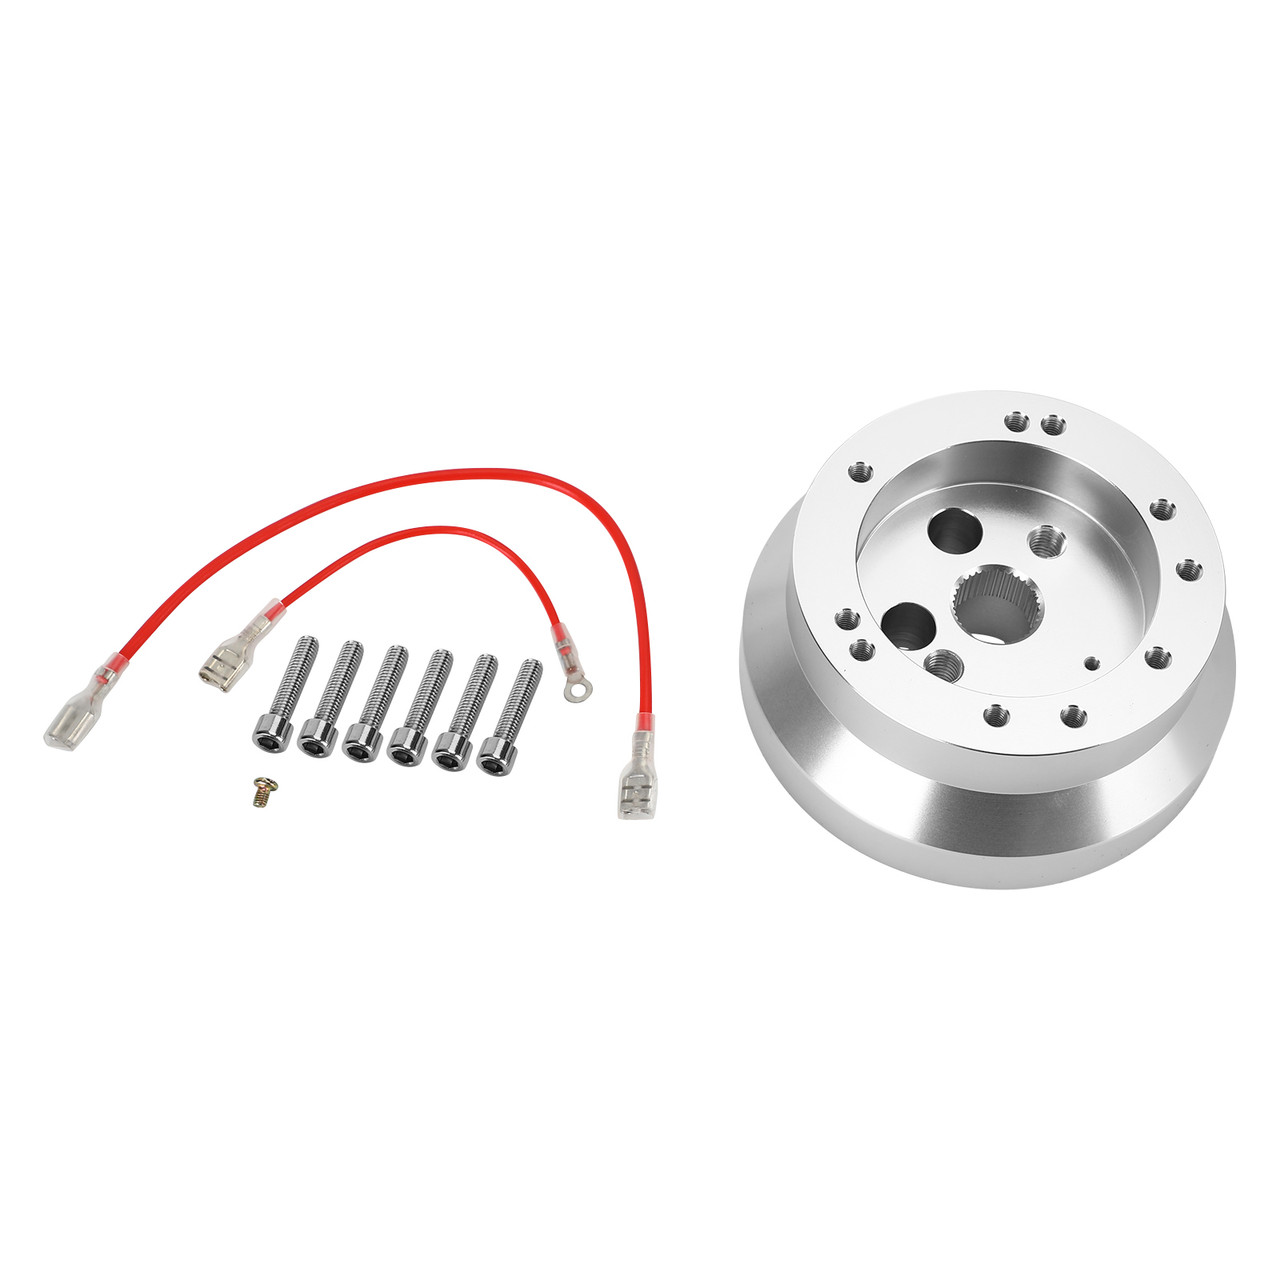 5 & 6 Hole Steering Wheel Short Hub Adapter Kit Fit for OLDSMOBILE All Models 69-93 Silver